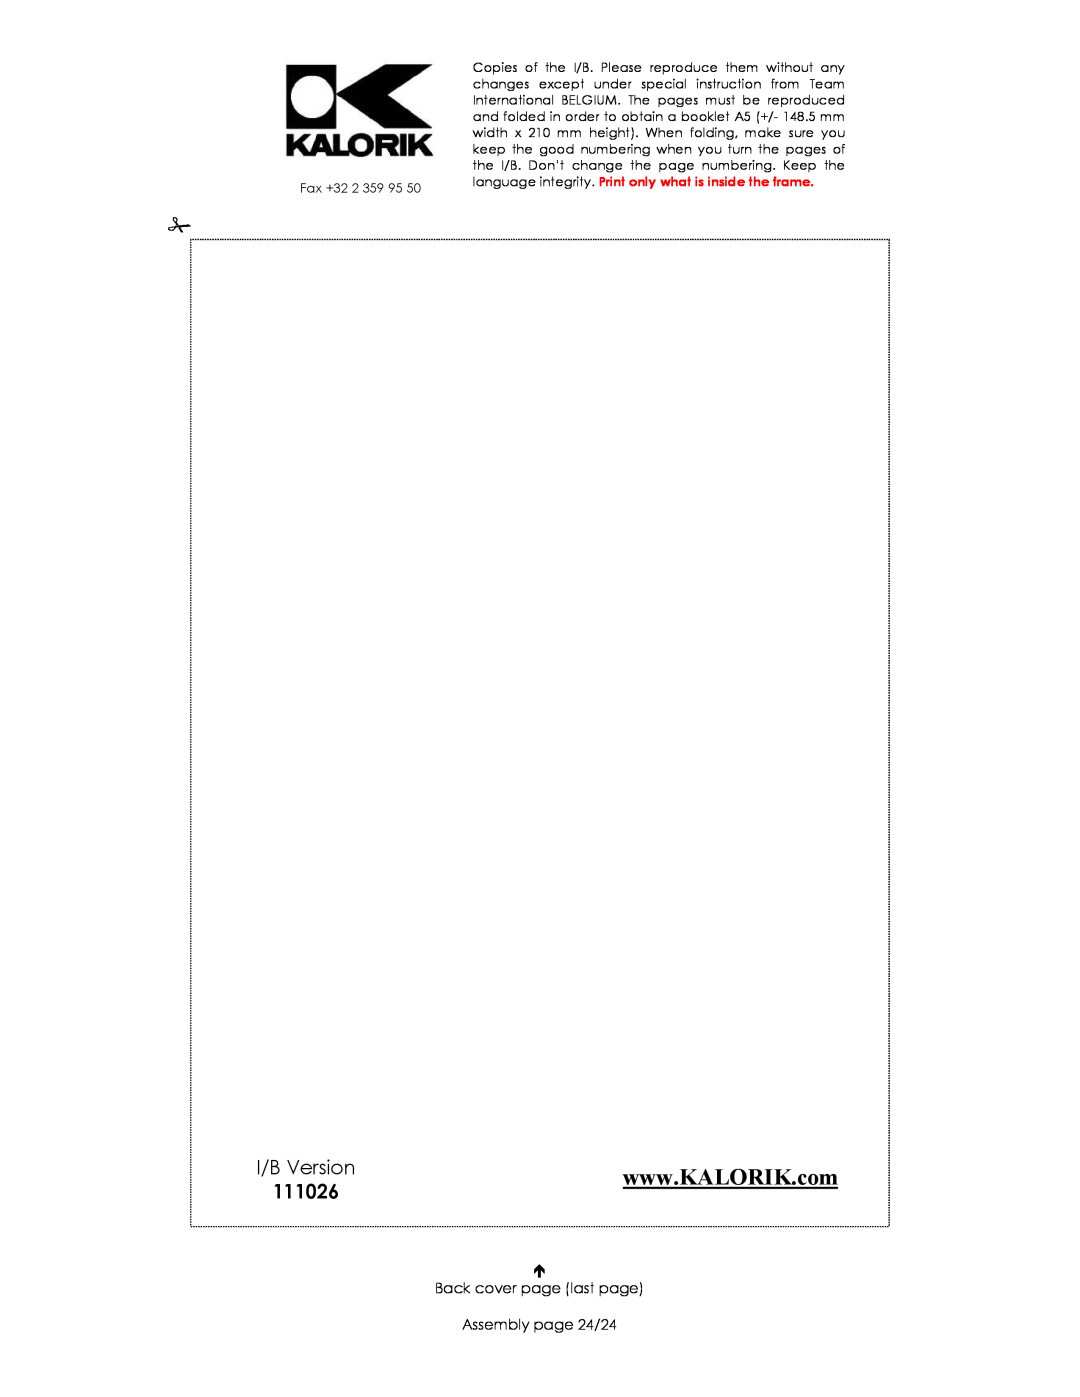 Kalorik USK MCL 36711 manual 111026, I/B Version, Back cover page last page Assembly page 24/24 